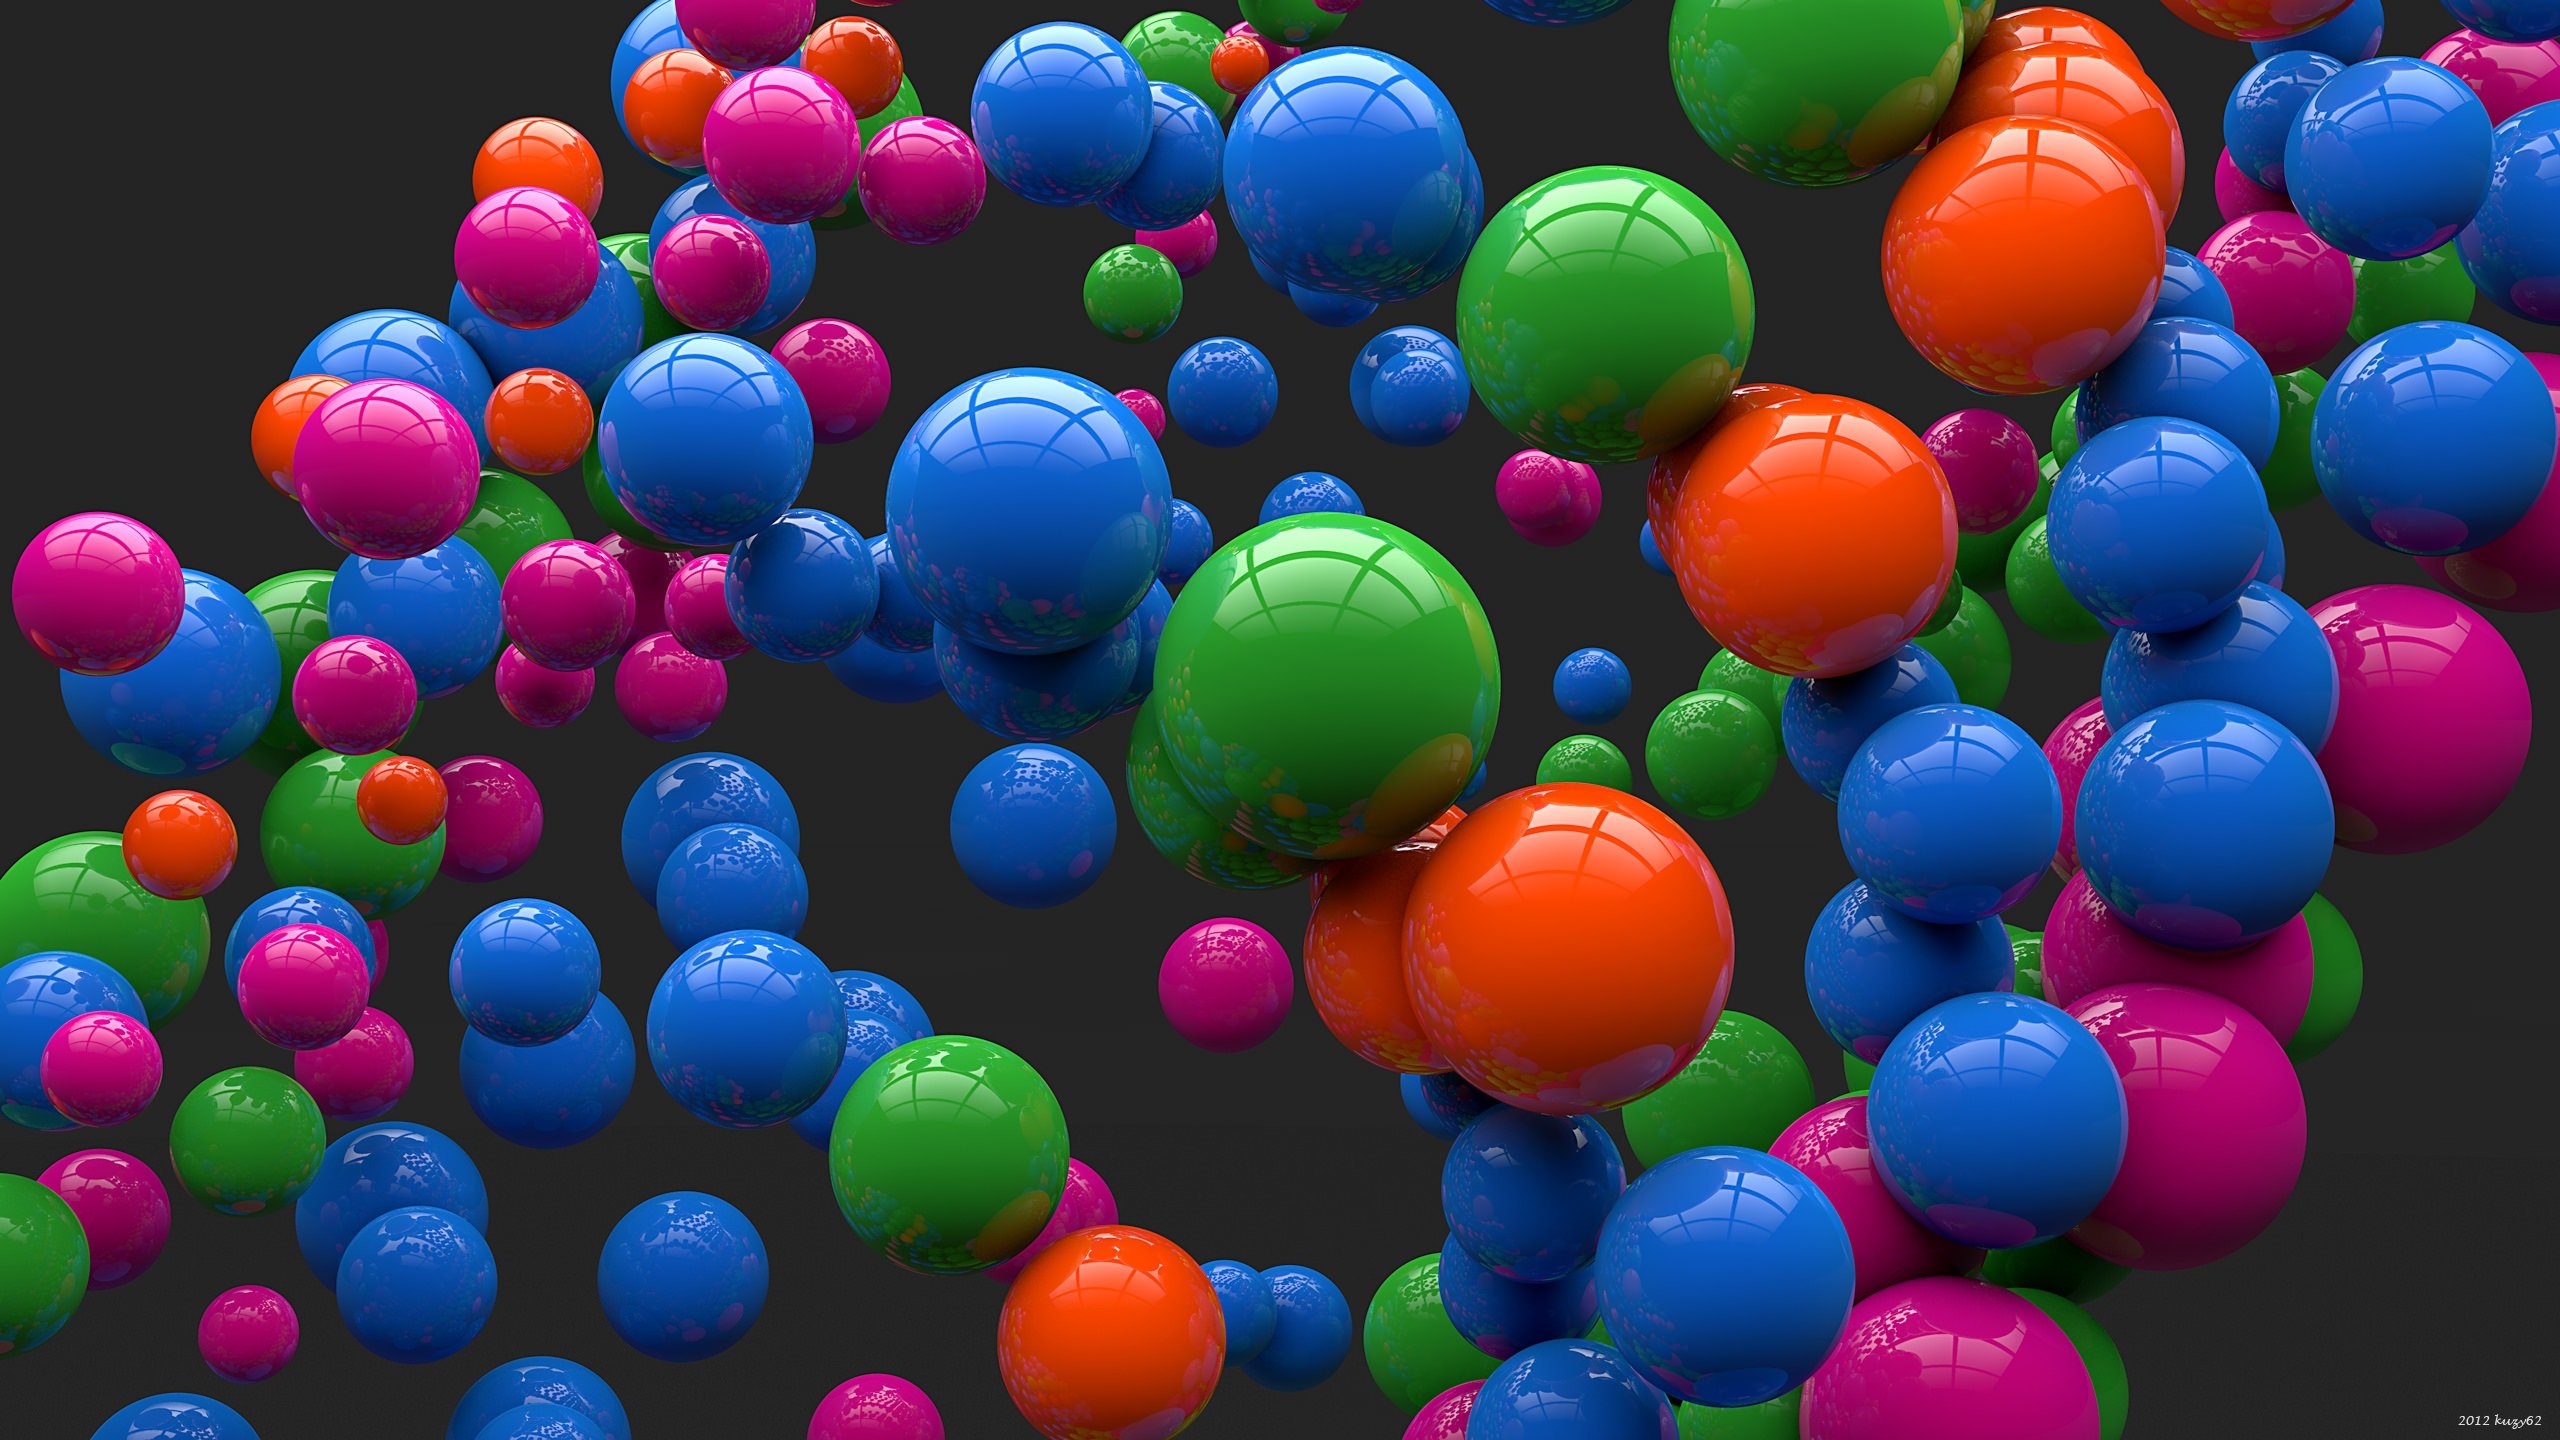 Colorful Balls Wallpaper for Social Media YouTube Channel Art